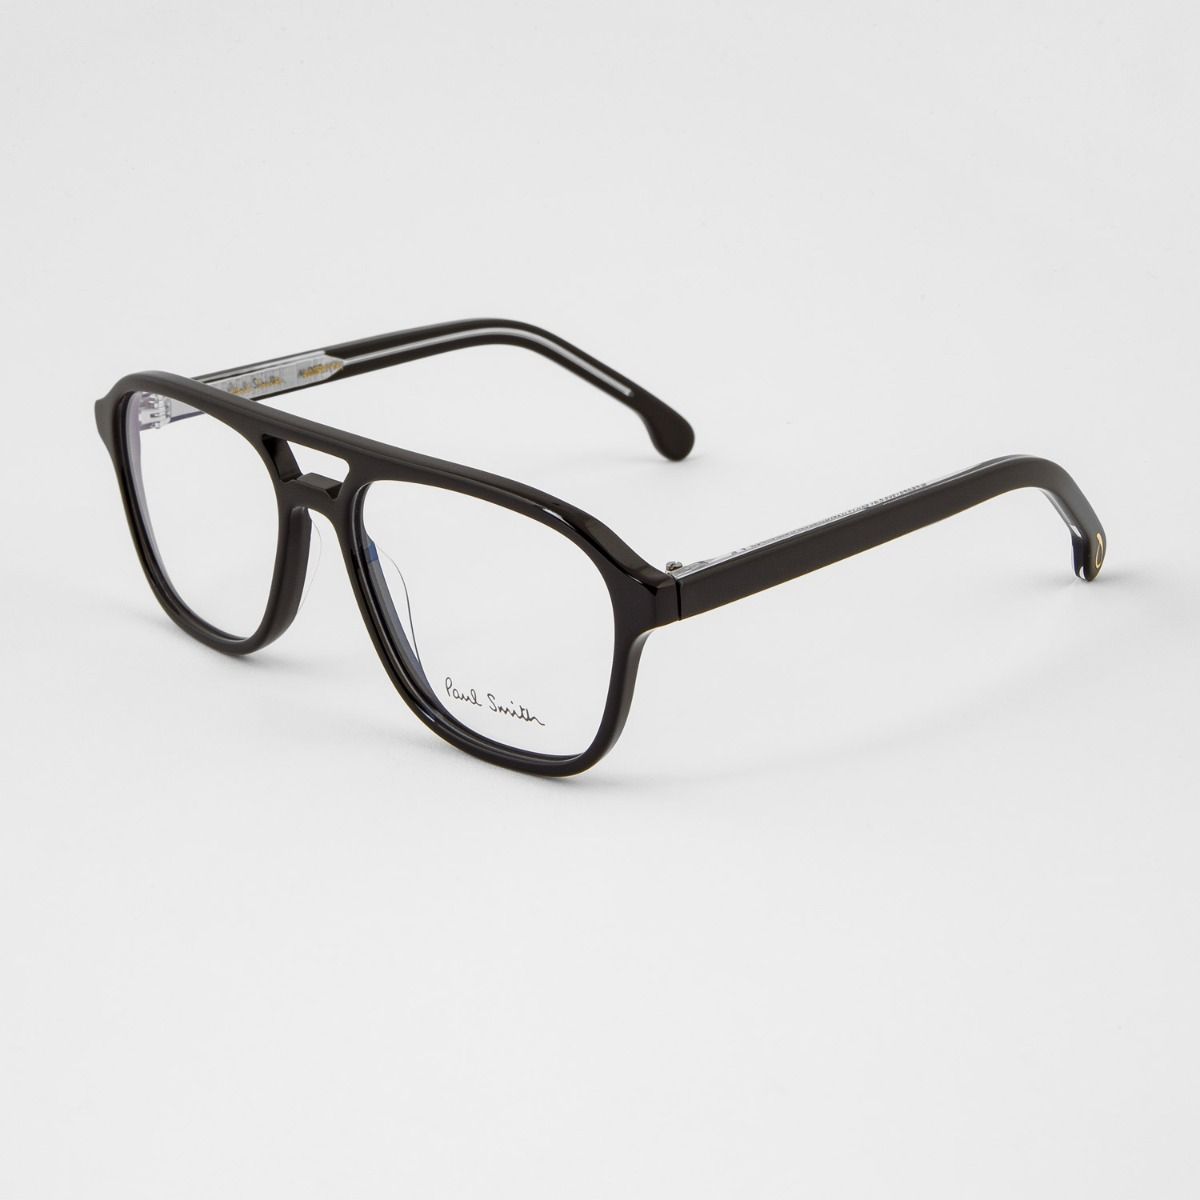 Paul Smith Alder Optical Aviator Glasses (Large)